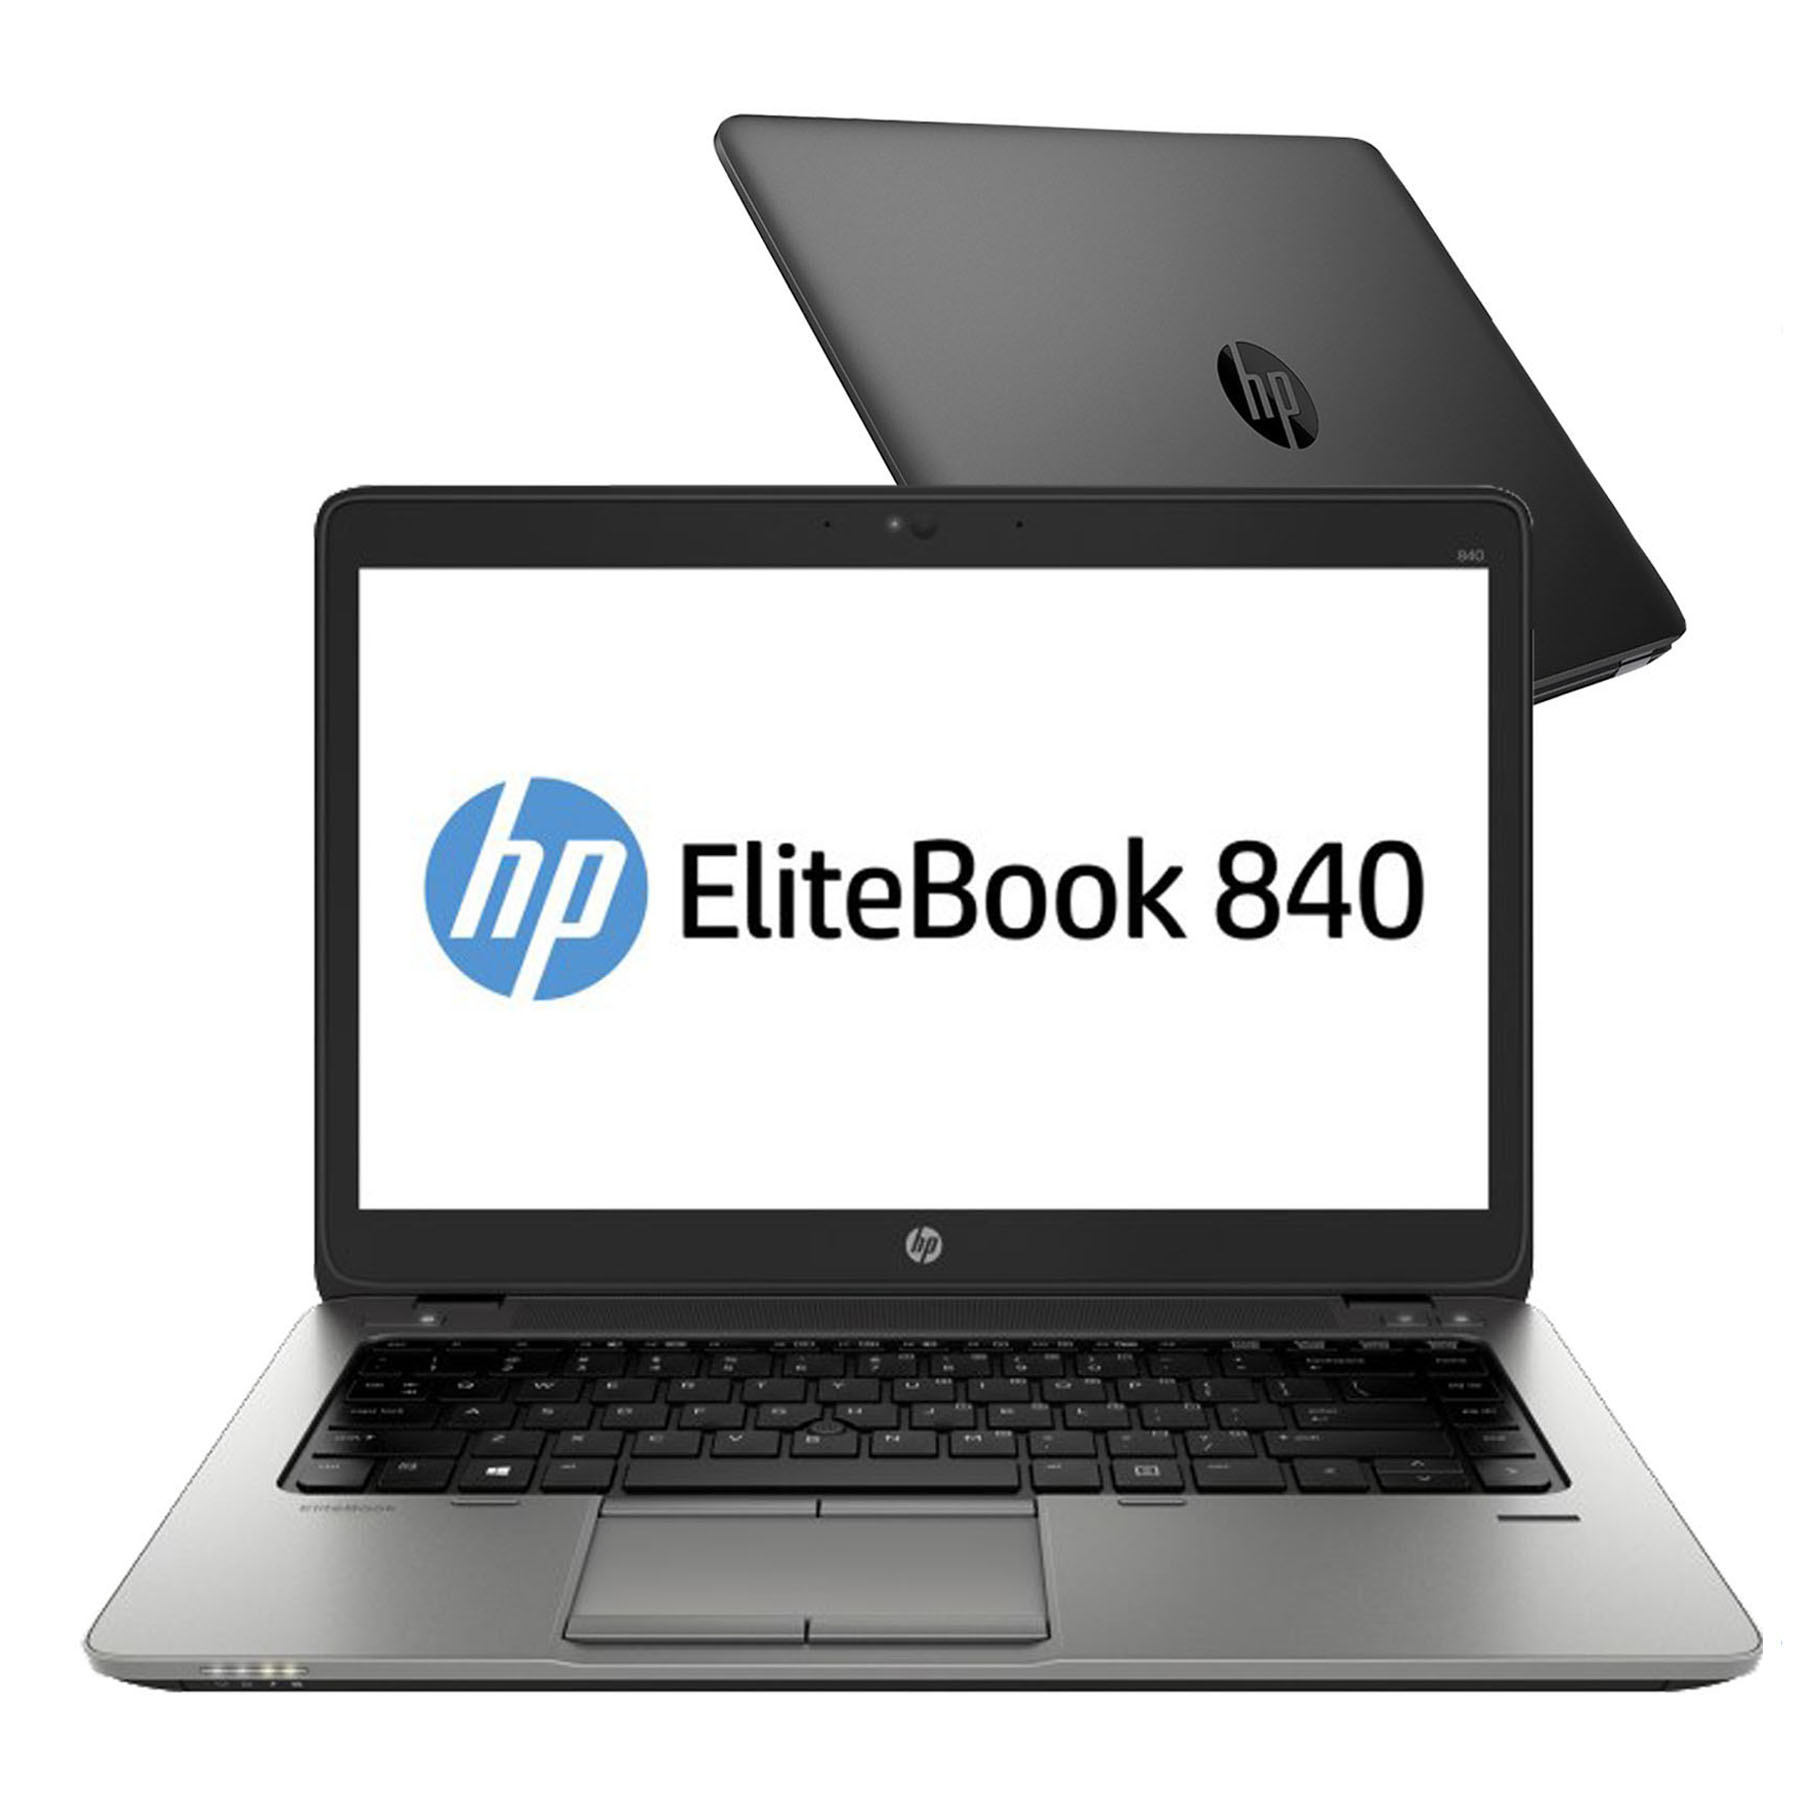 Laptop cũ HP EliteBook 840 G1 (Core i5-4300U, 4GB, 120GB, VGA Intel HD Graphics 4400, 14 inch)